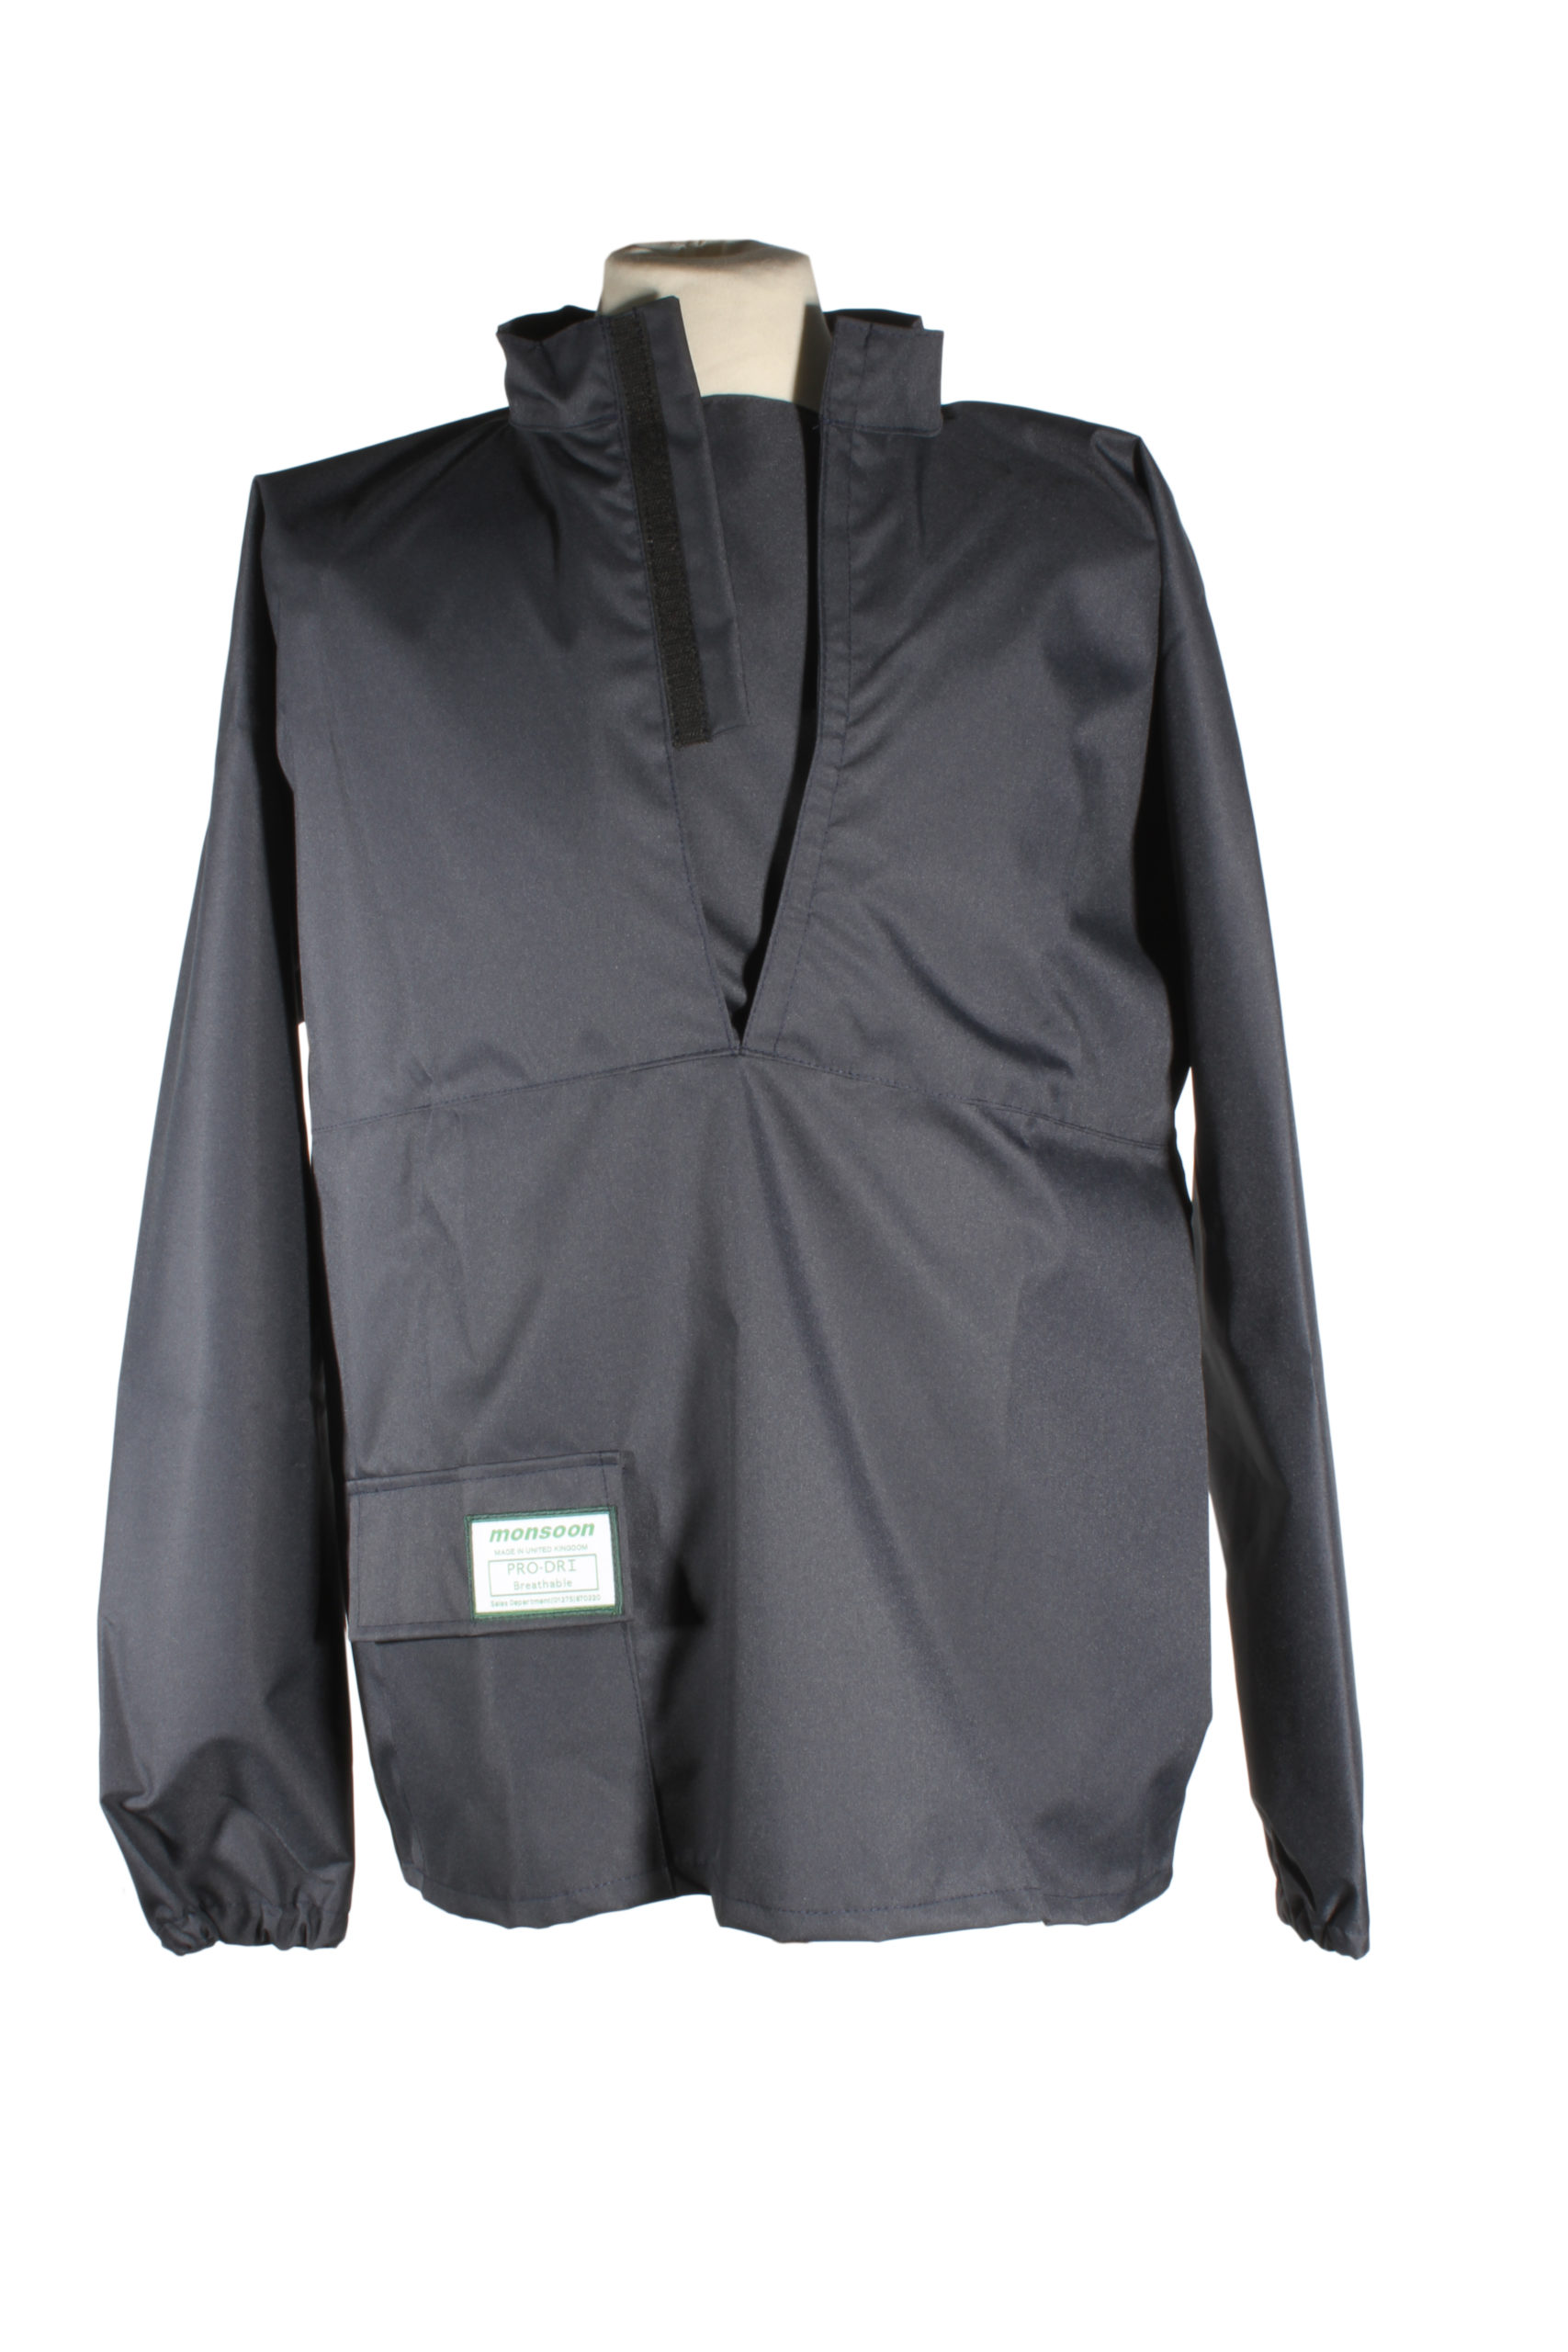 Monsoon Pro Dri Parlour Jacket Navy Long Sleeve - Farm and Rural Supplies